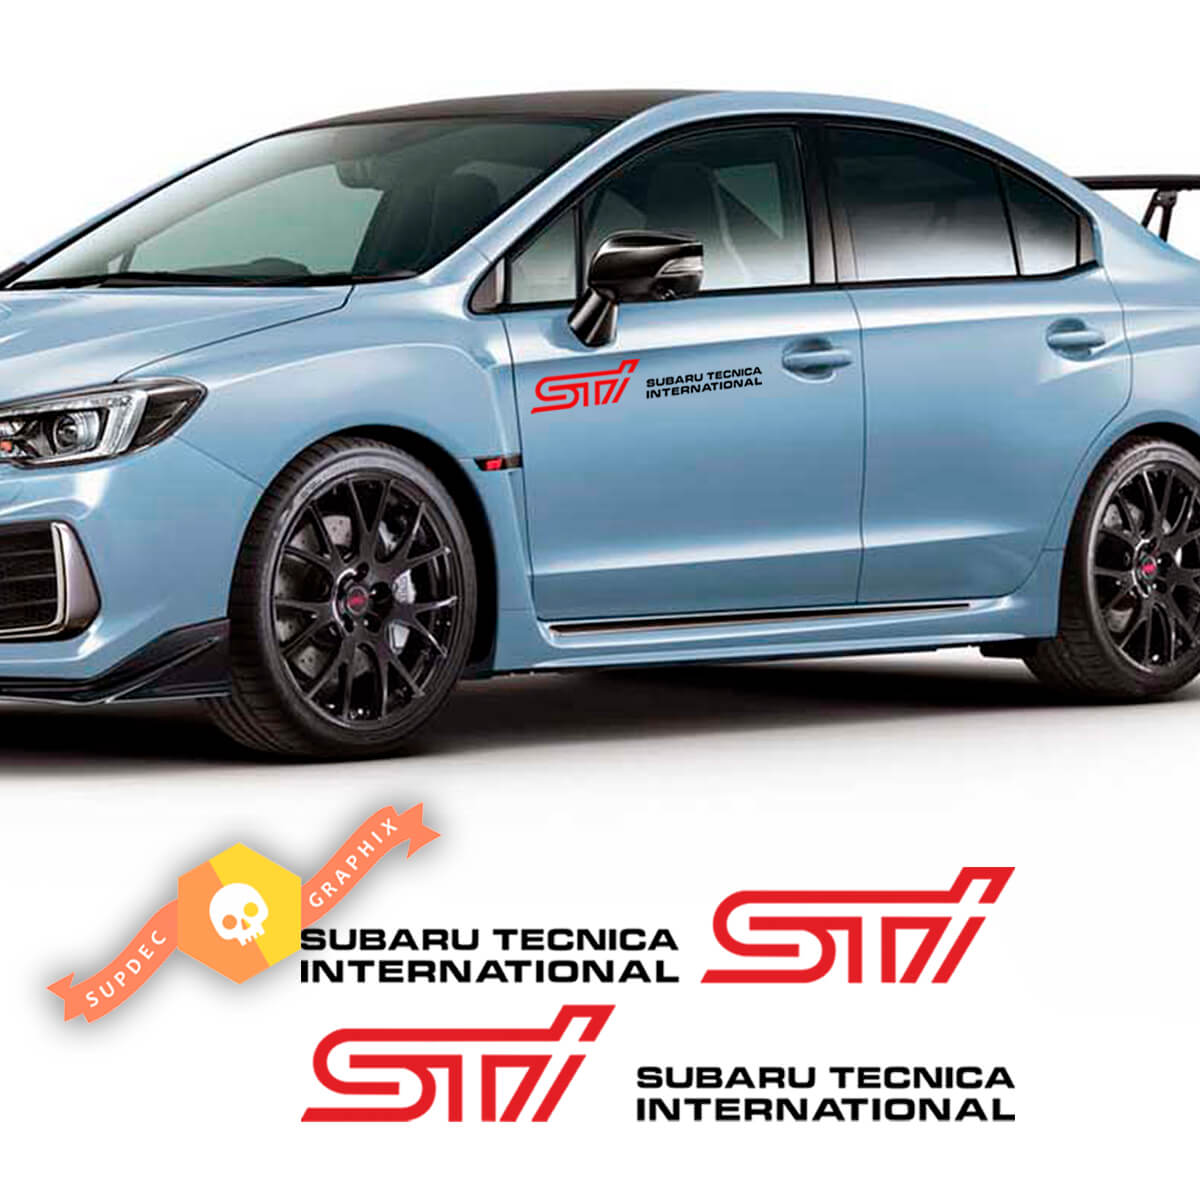 2X STI Subaru Tecnica International Dors Cover Vinyl Aufkleber Aufkleber